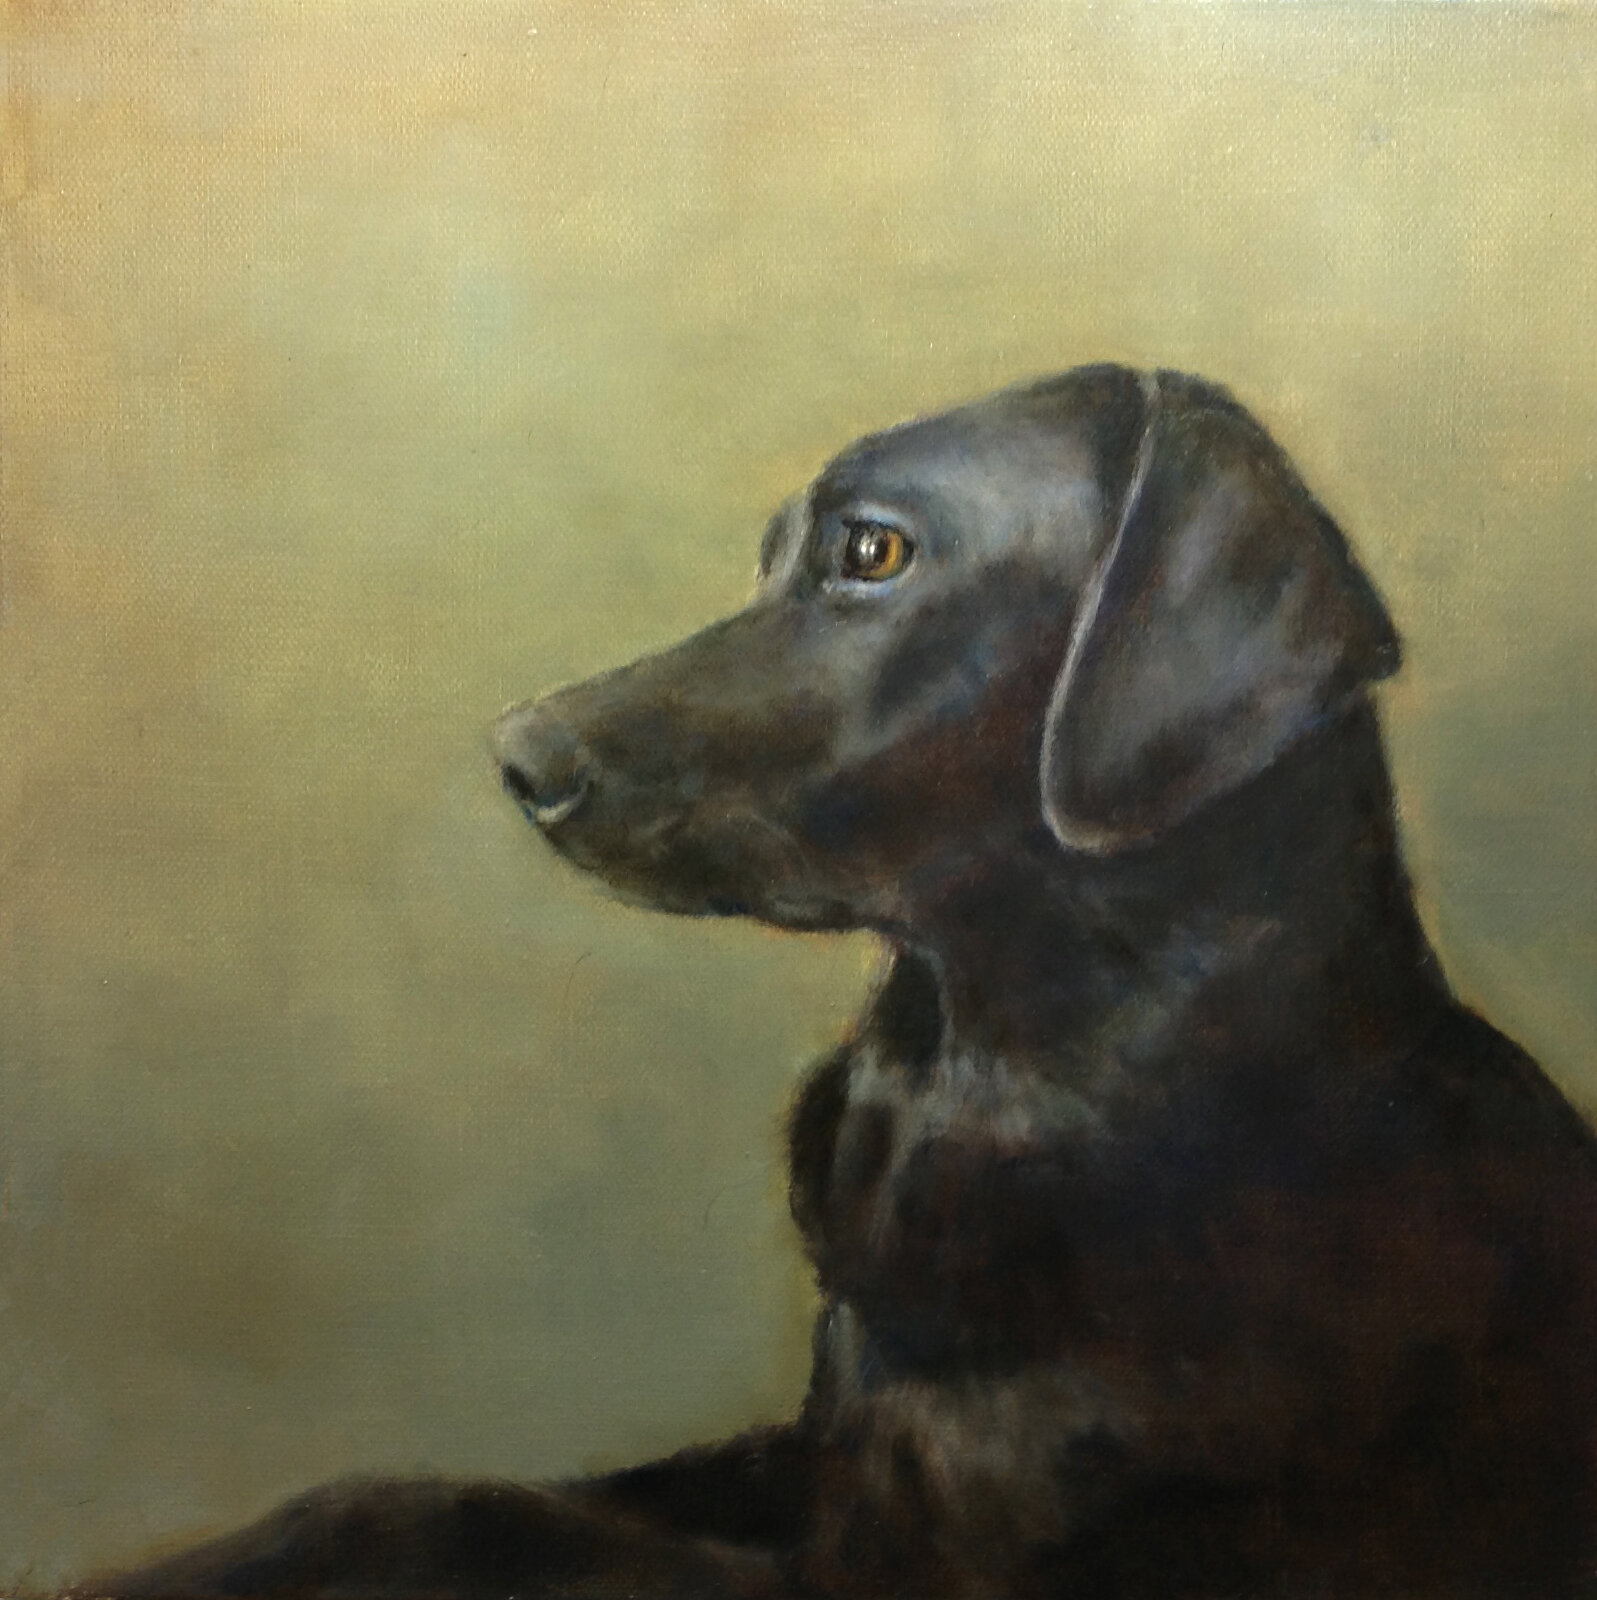  Mary Lou Schempf  Stella,    12” x 12”, oil on canvas  (private collection)  